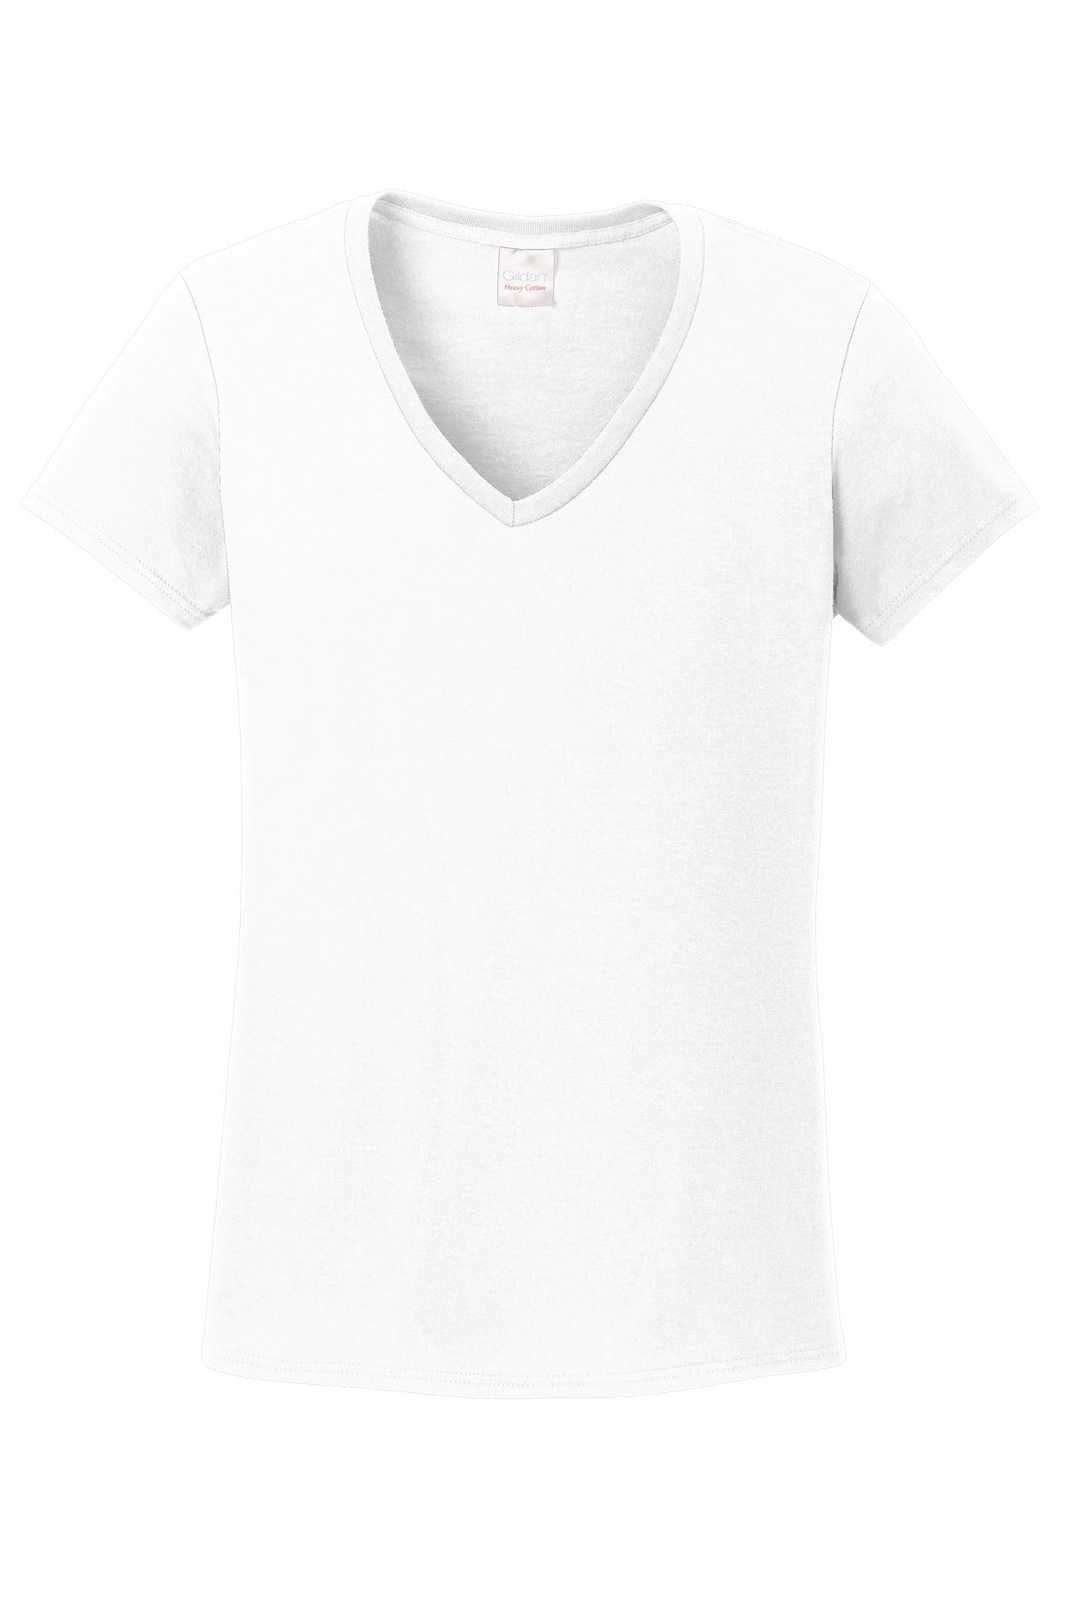 Gildan 5V00L Ladies Heavy Cotton 100% Cotton V-Neck T-Shirt - White - HIT a Double